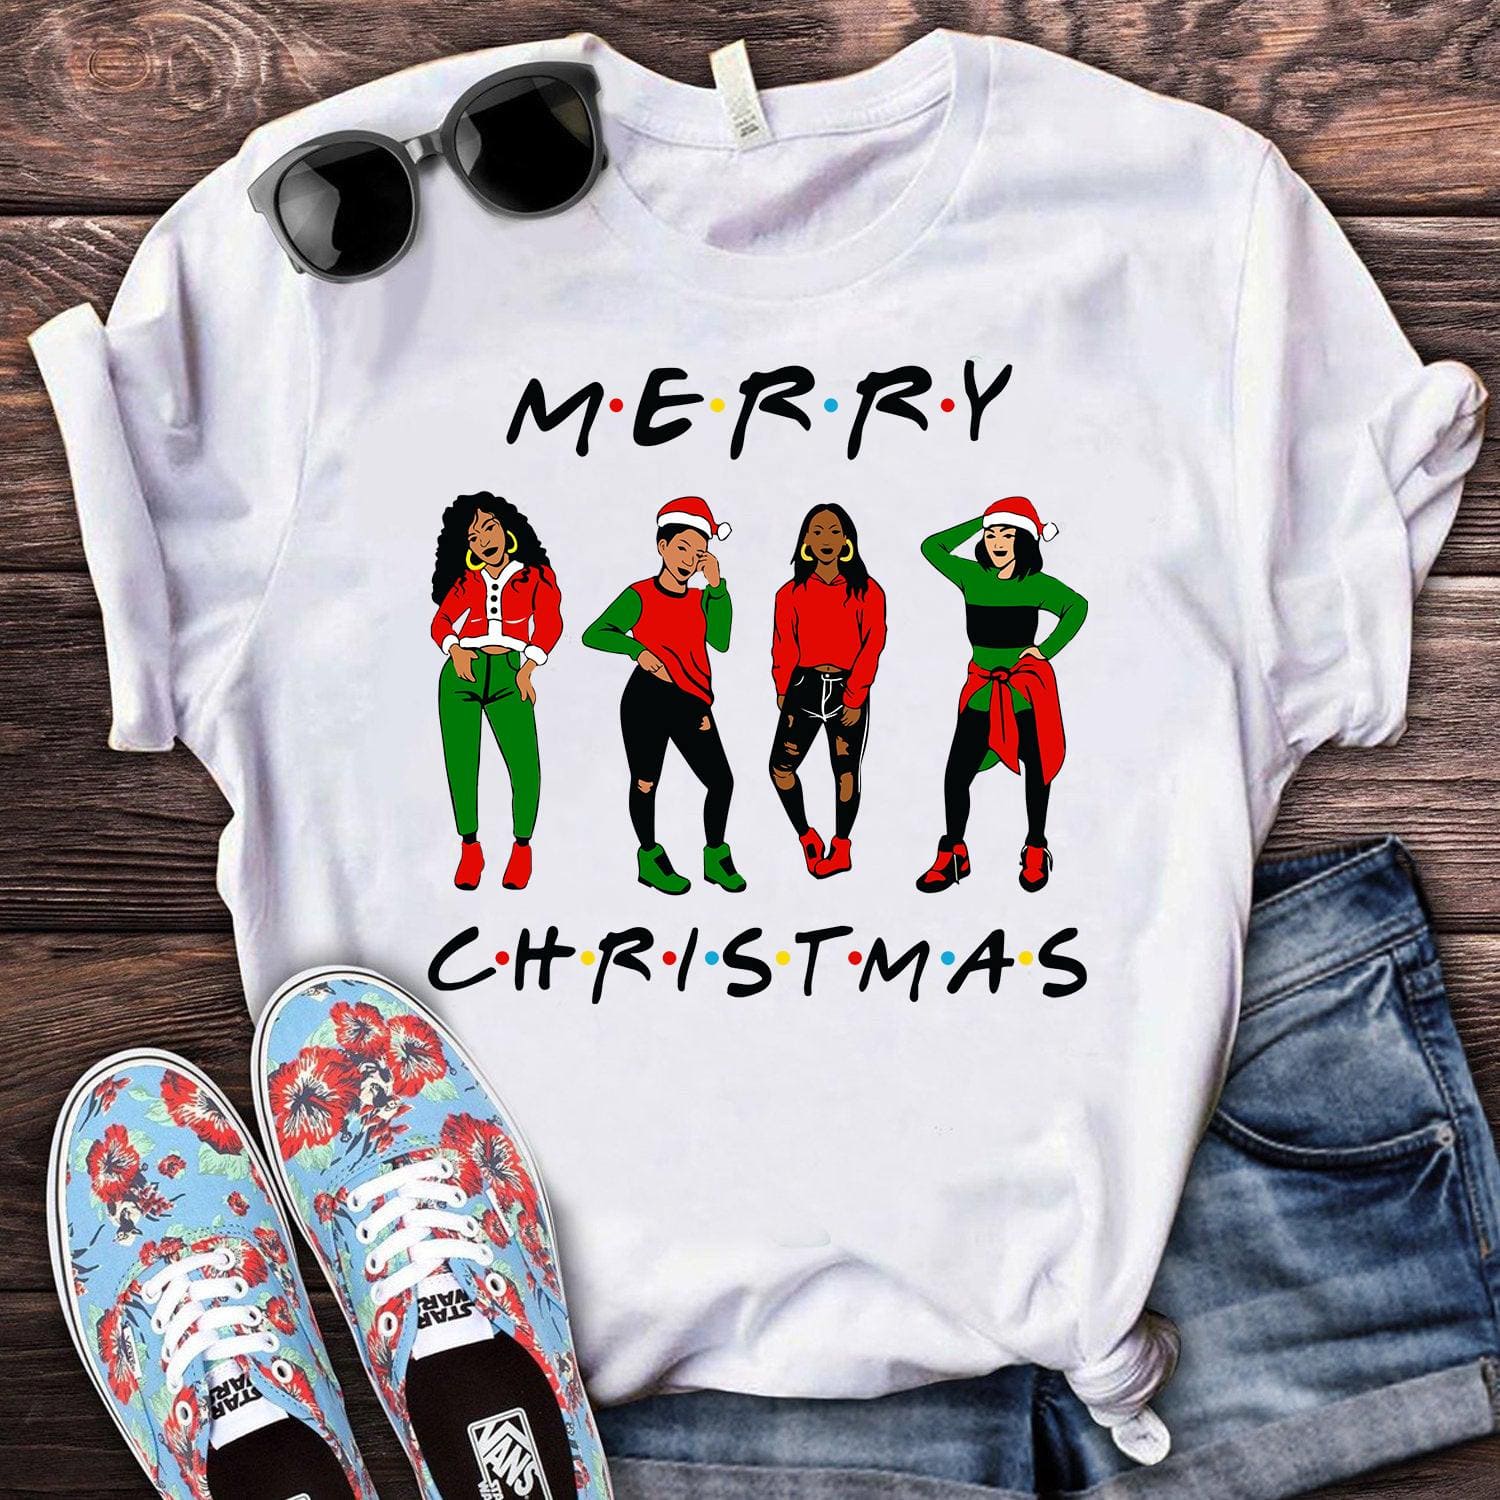 Merry Christmas - Christmas gift for sisters, Black sisters T-shirt